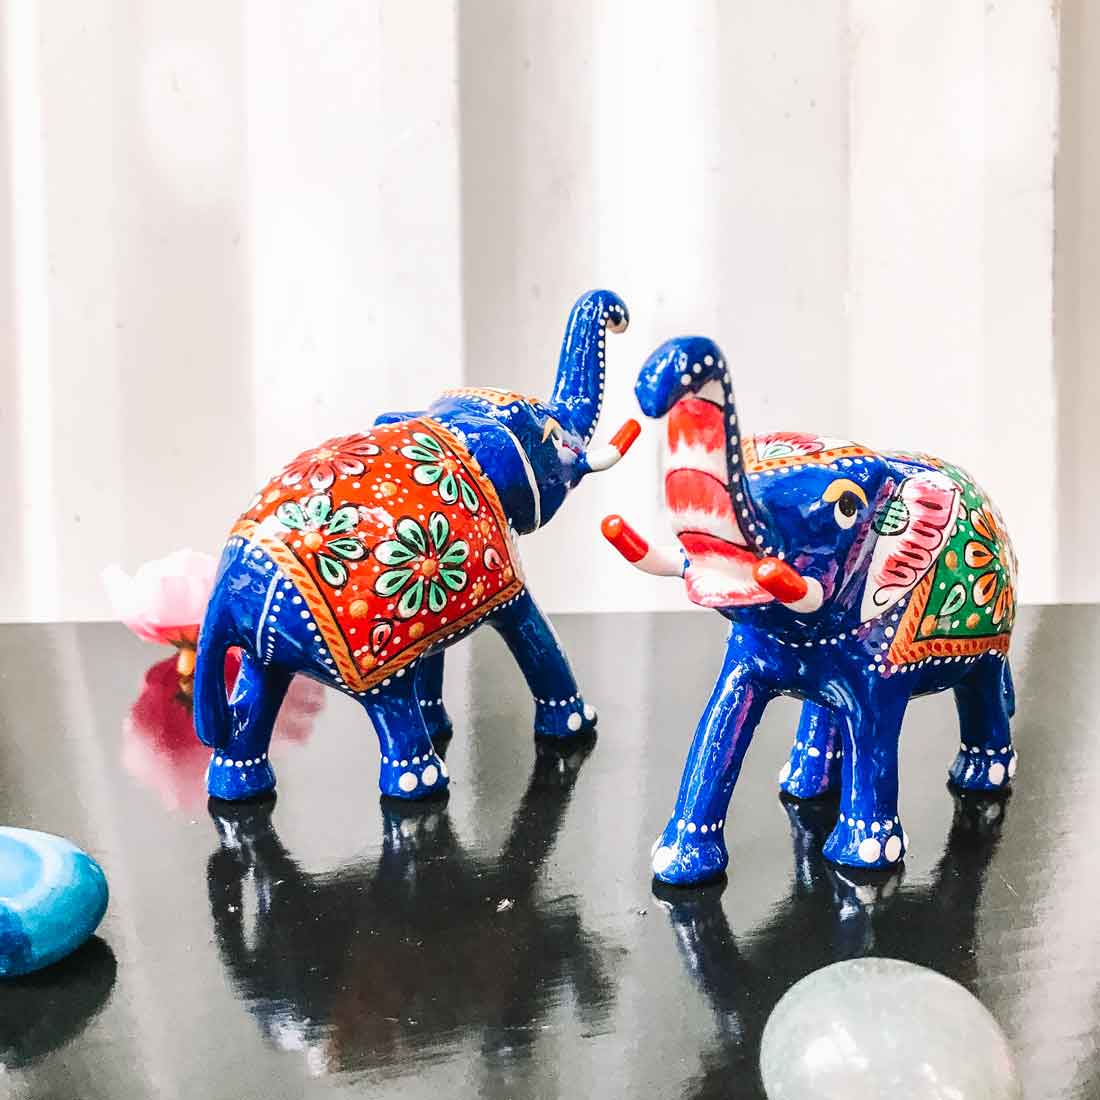 Elephant Showpiece For Home Decor & Gifts - 2 Inch -Set of 2 - ApkaMart